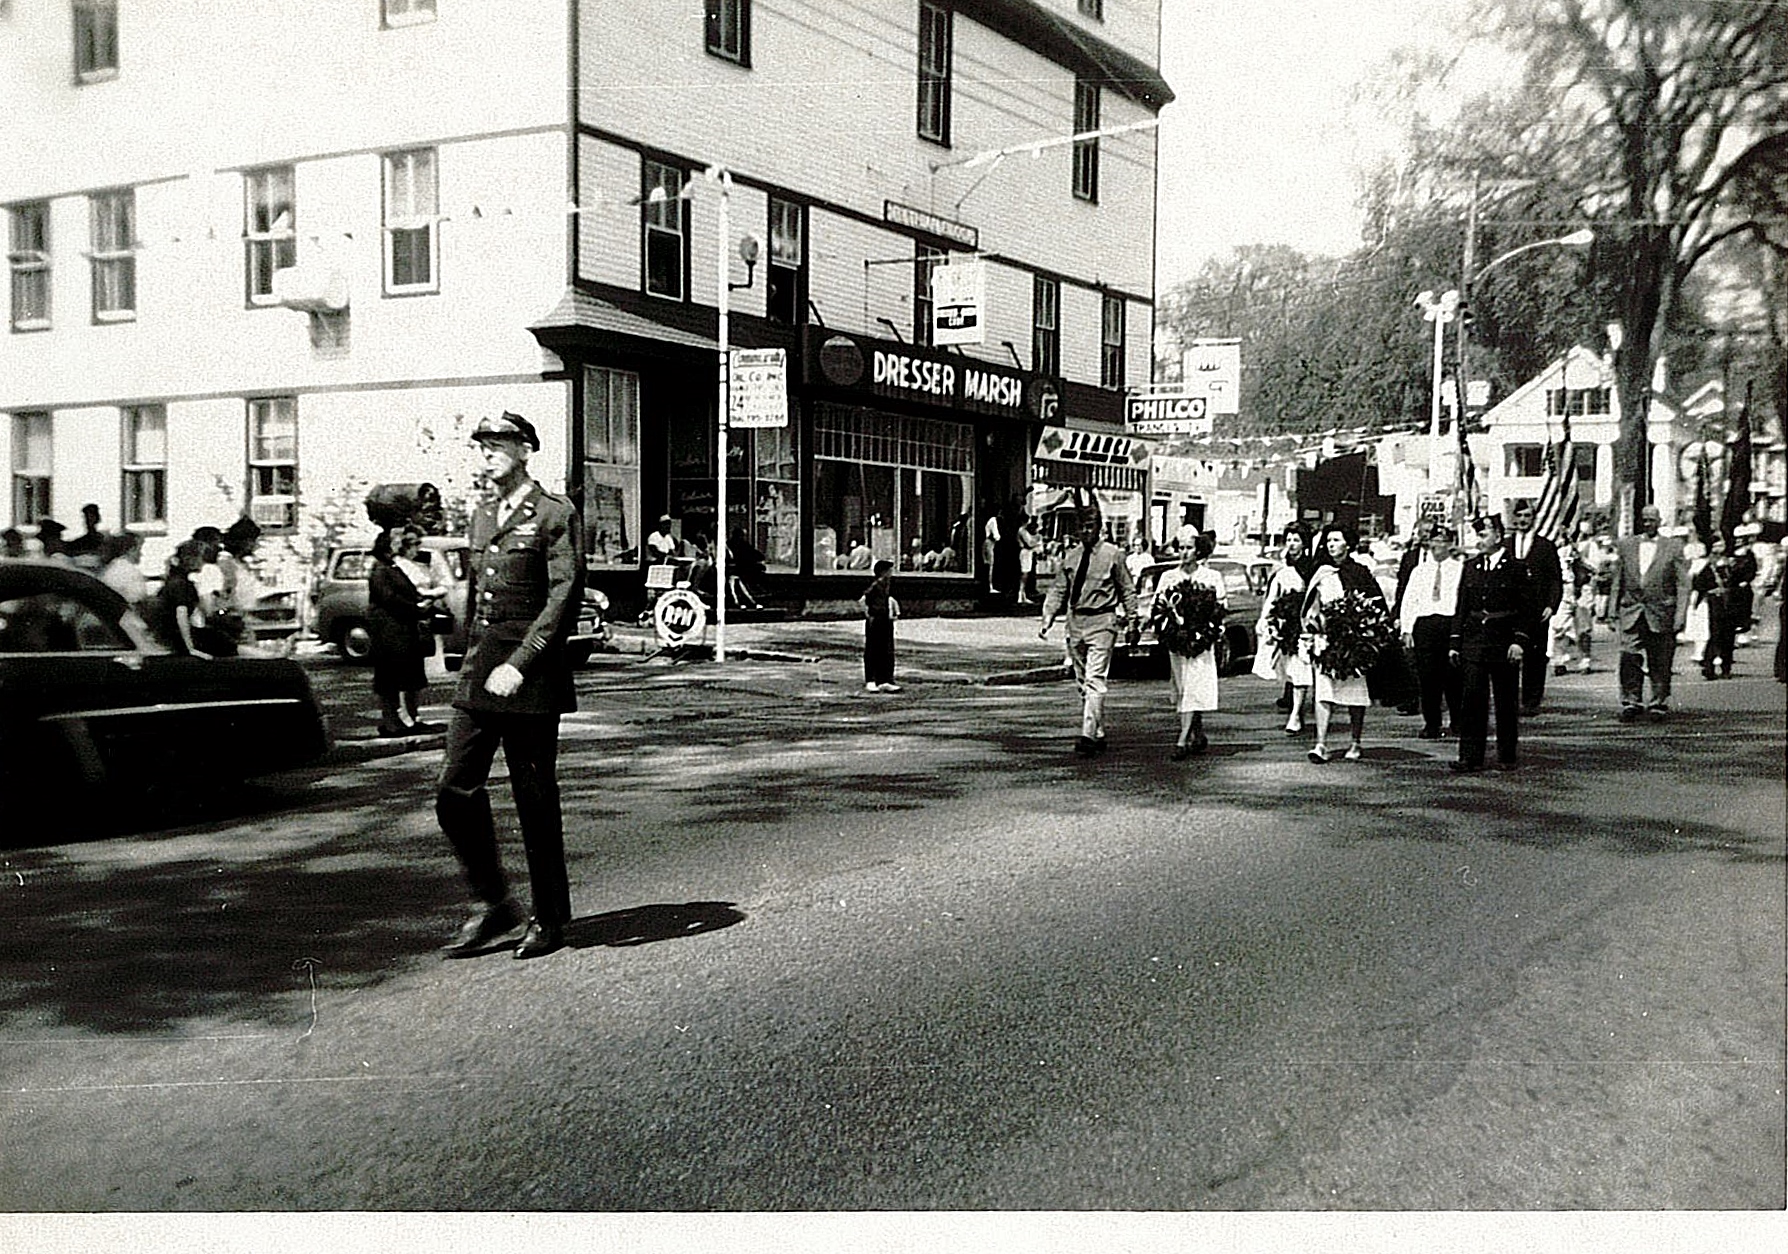 Memorial Day parade on Main Street, c.1955